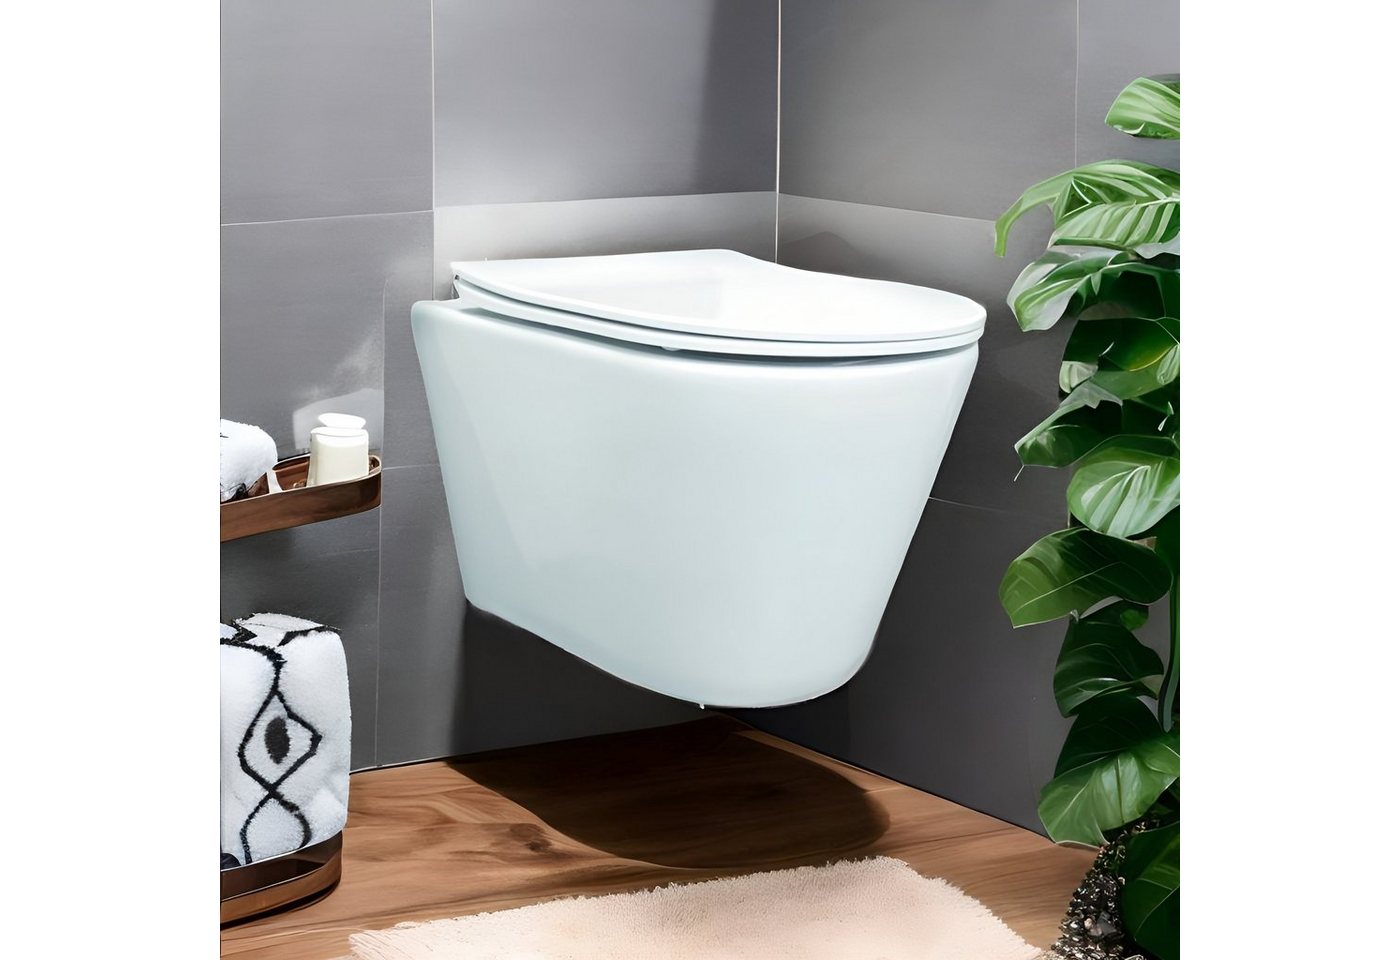 KOLMAN Tiefspül-WC Spülrandlos Wand-WC Milos, Weiß, mit Slim Soft-close WC-Sitz und Schallschutzmatte von KOLMAN